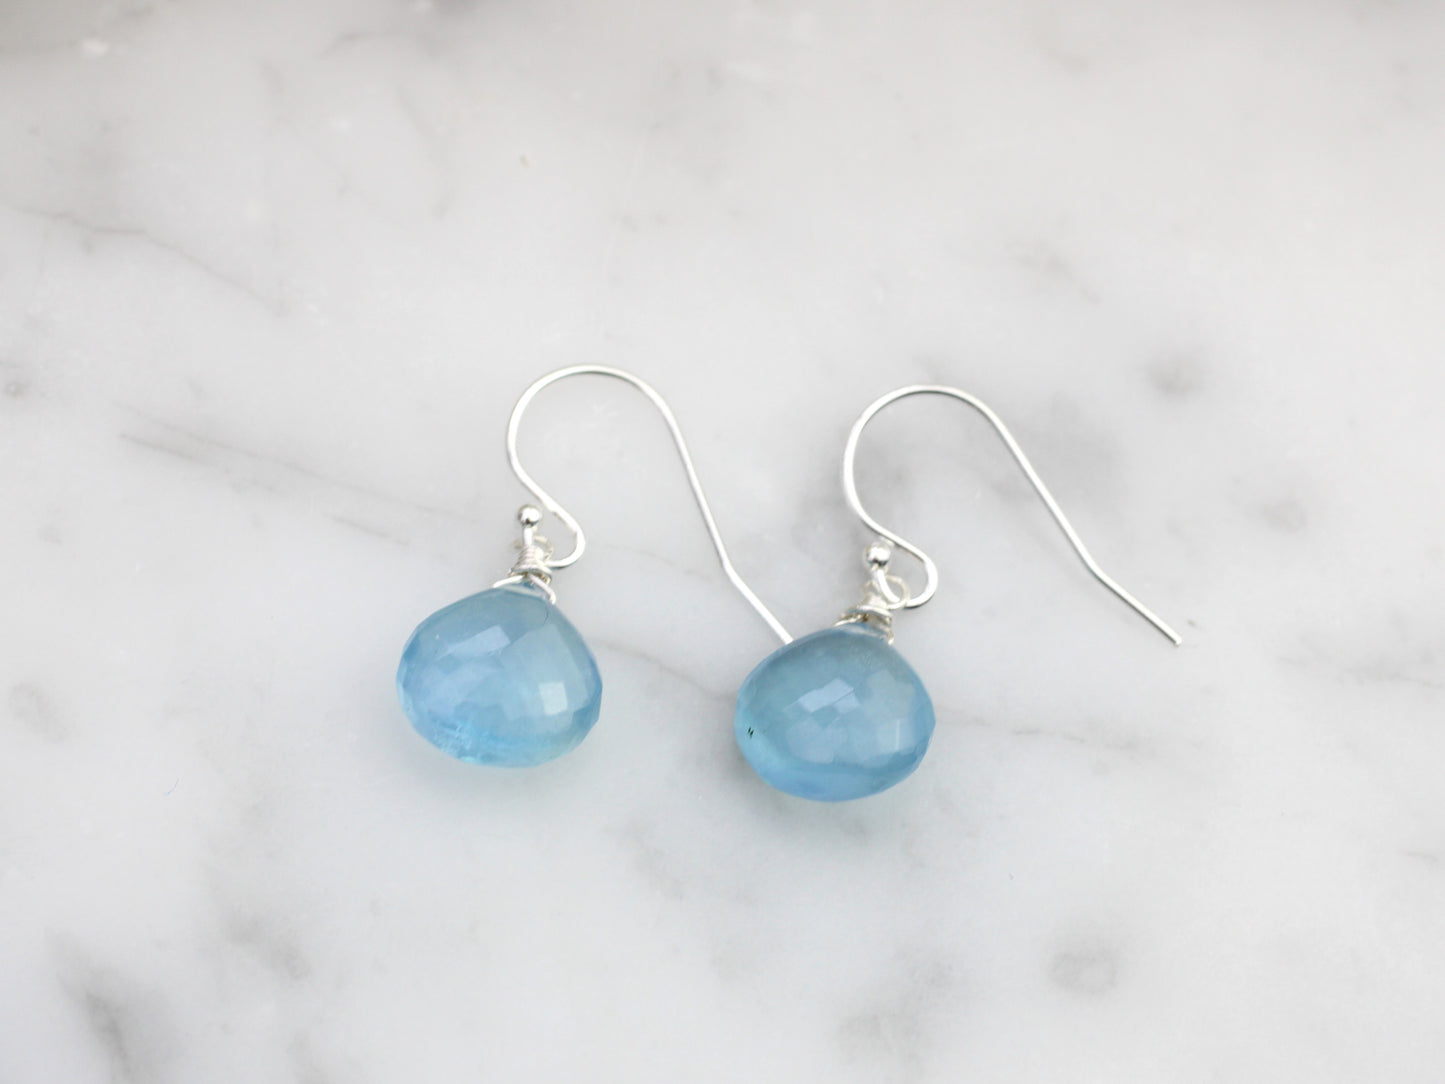 Aquamarine drop earrings in silver or gold.